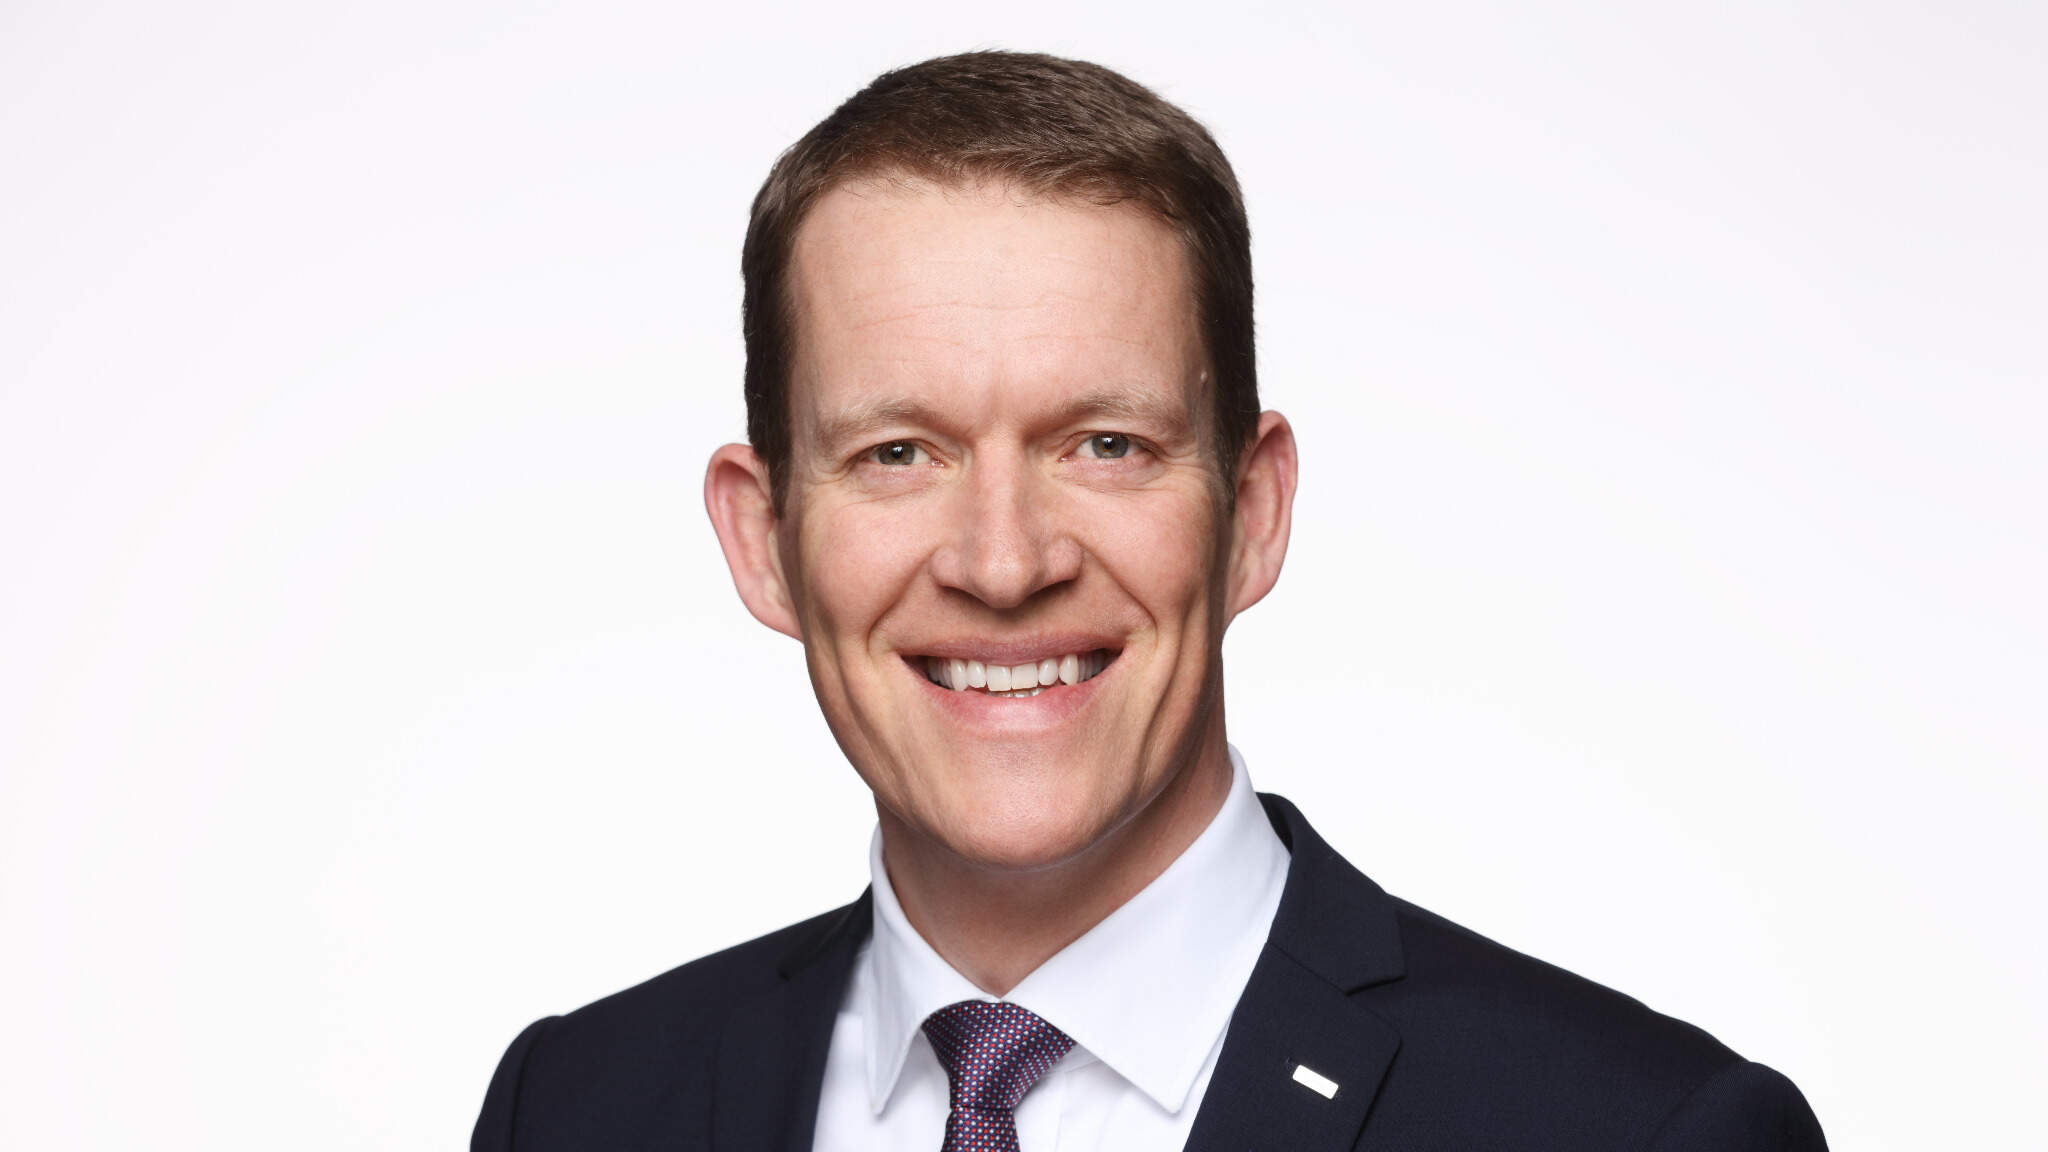 Burkhard Eling于2021年1月1日成为物流提供商DACHSER的首席执行官(CEO)及执行董事会的发言人。